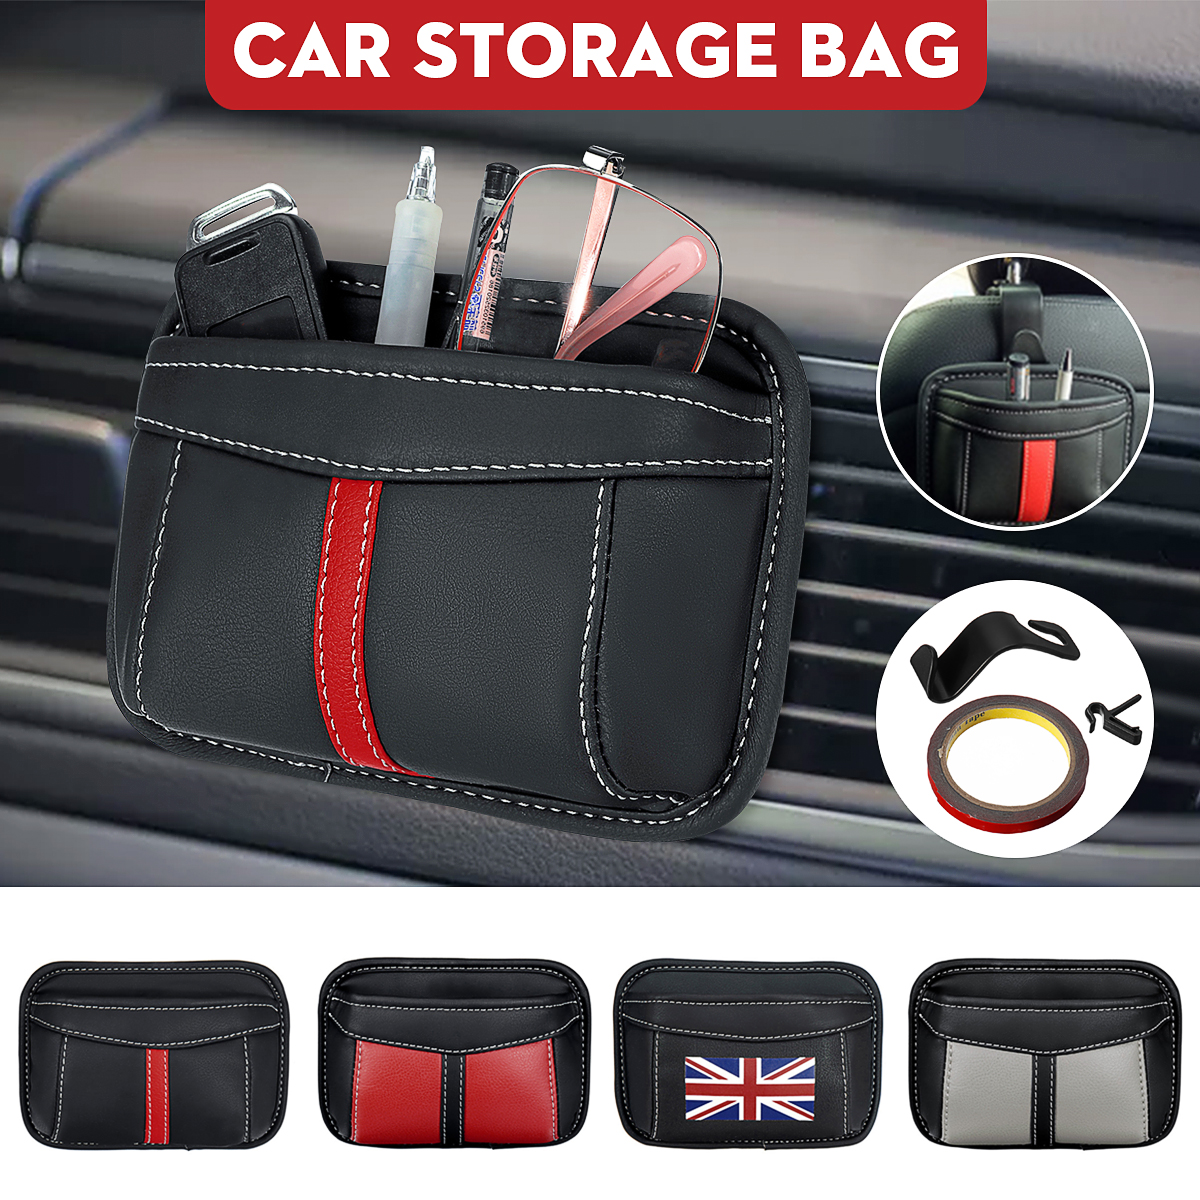 Car-Storage-Bag-Organizer-Phone-Wallet-Pocket-Pouch-Hanging-Holder-PU-leather-1632847-1